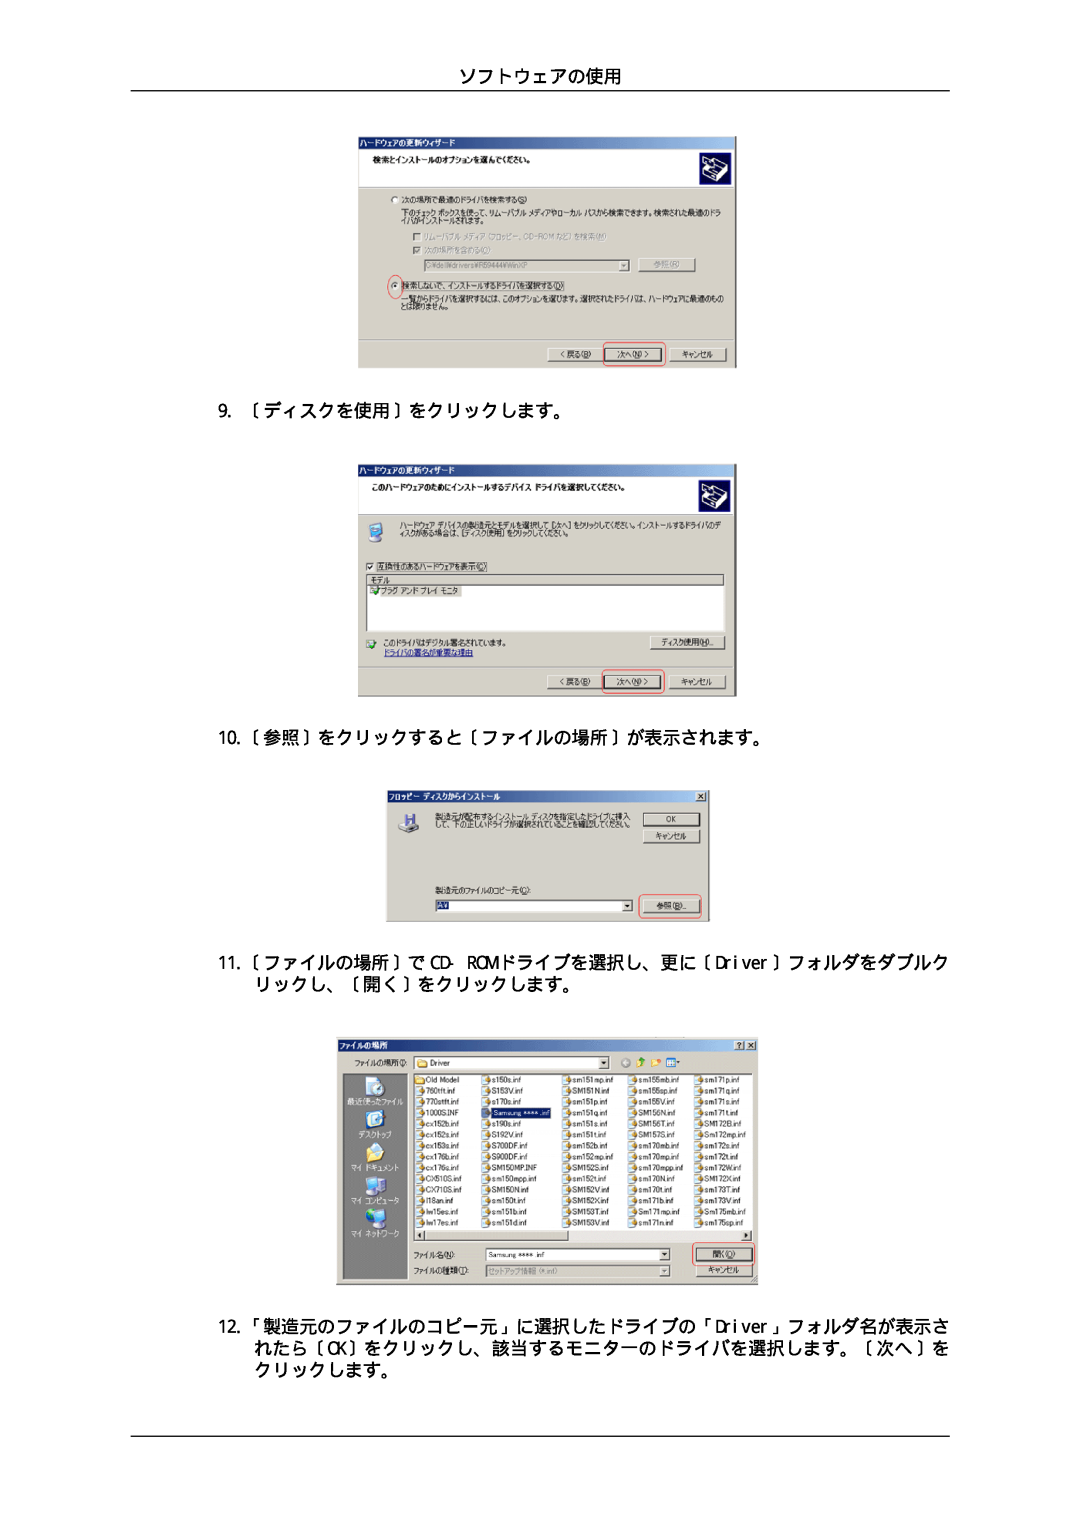 Samsung LH46CKSLBB/XJ, LH46CBULBB/XJ, LH46CBSLBB/XJ manual ソフトウェアの使用 9. 〔ディスクを使用〕をクリックします。 10.〔参照〕をクリックすると〔ファイルの場所〕が表示されます。 